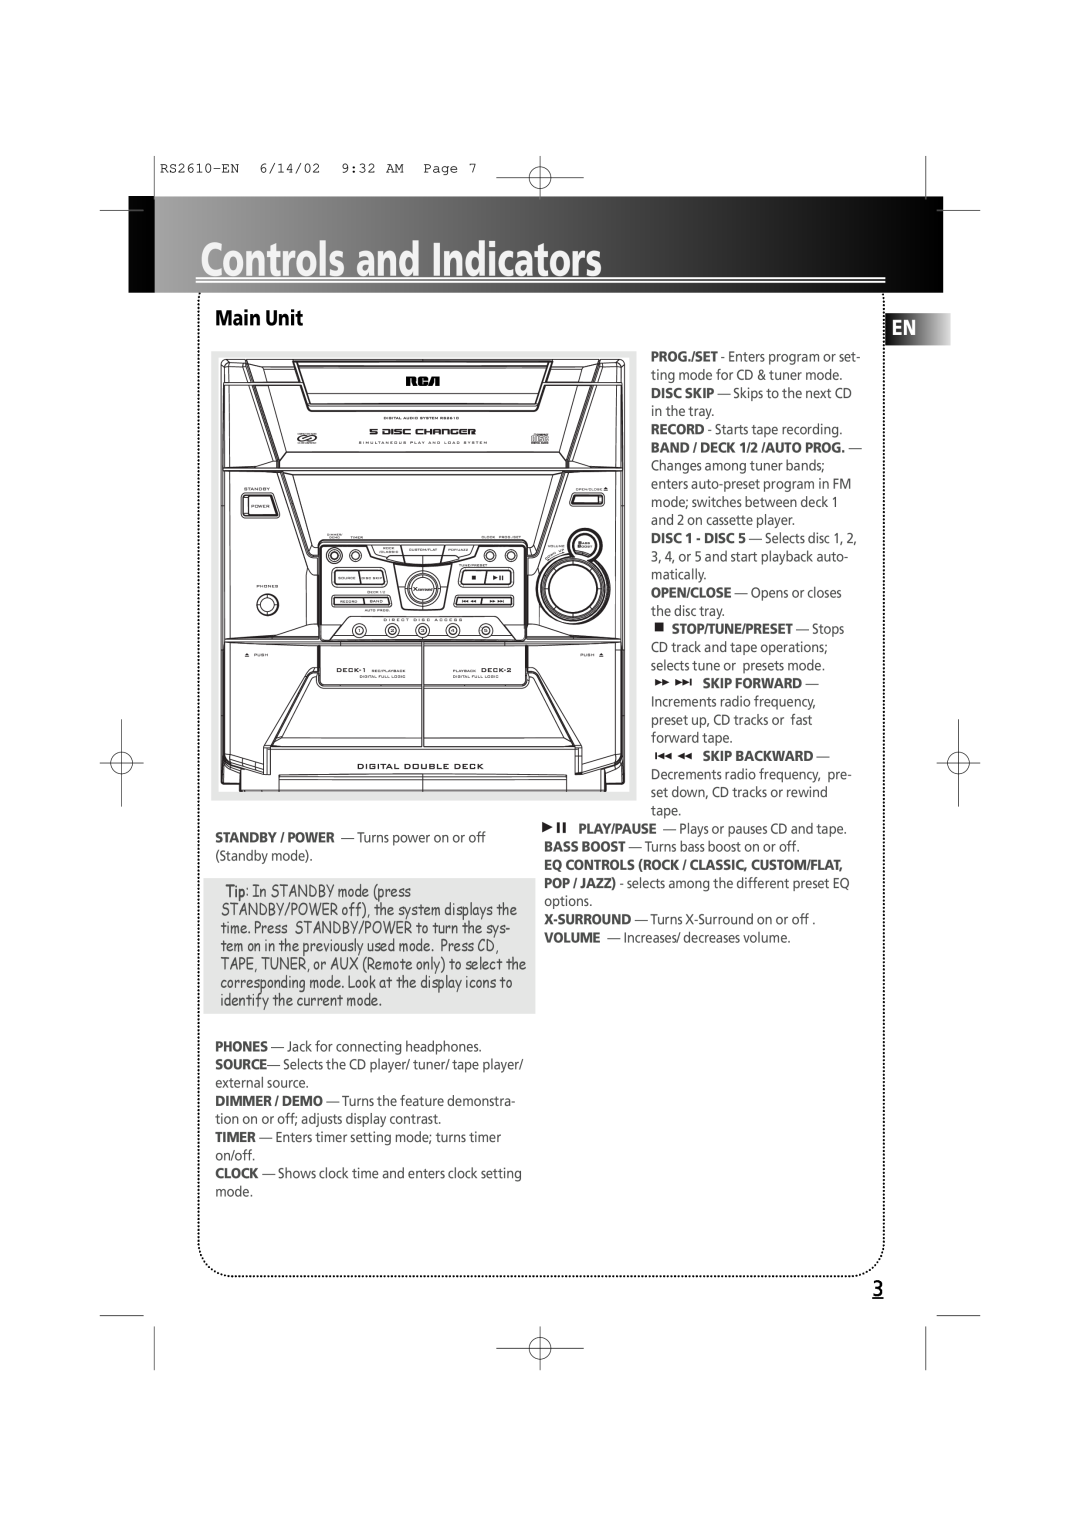 RCA fm radio tuner manual Controls and Indicators, Main Unit 